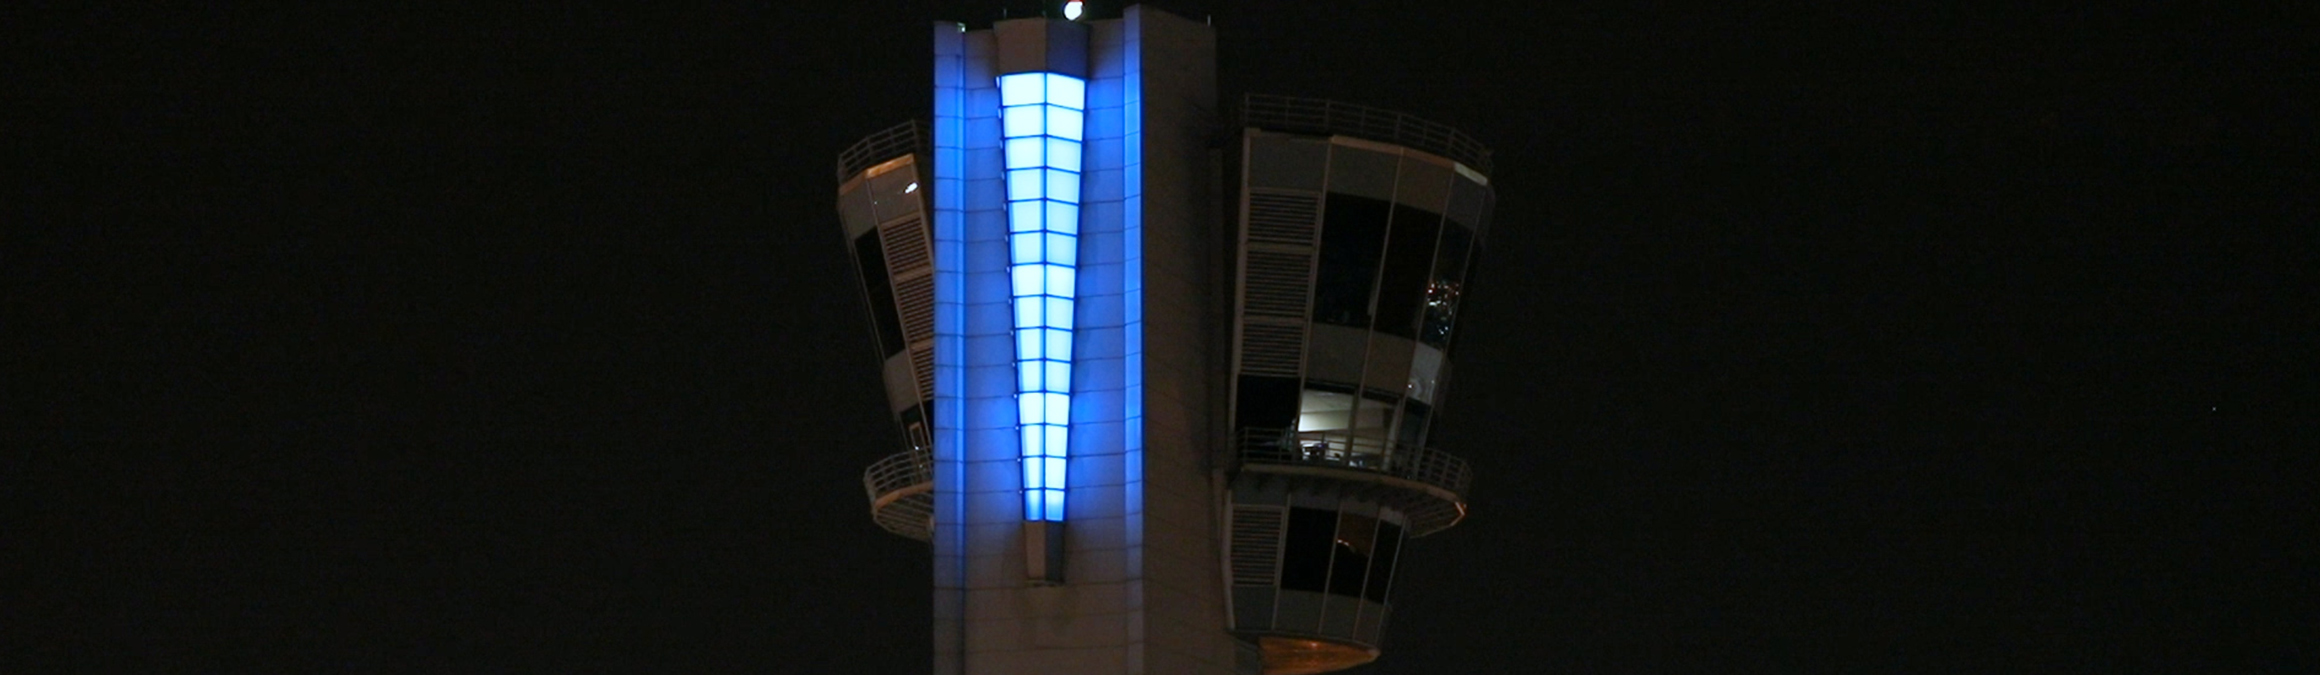 Ramp Tower - Blue